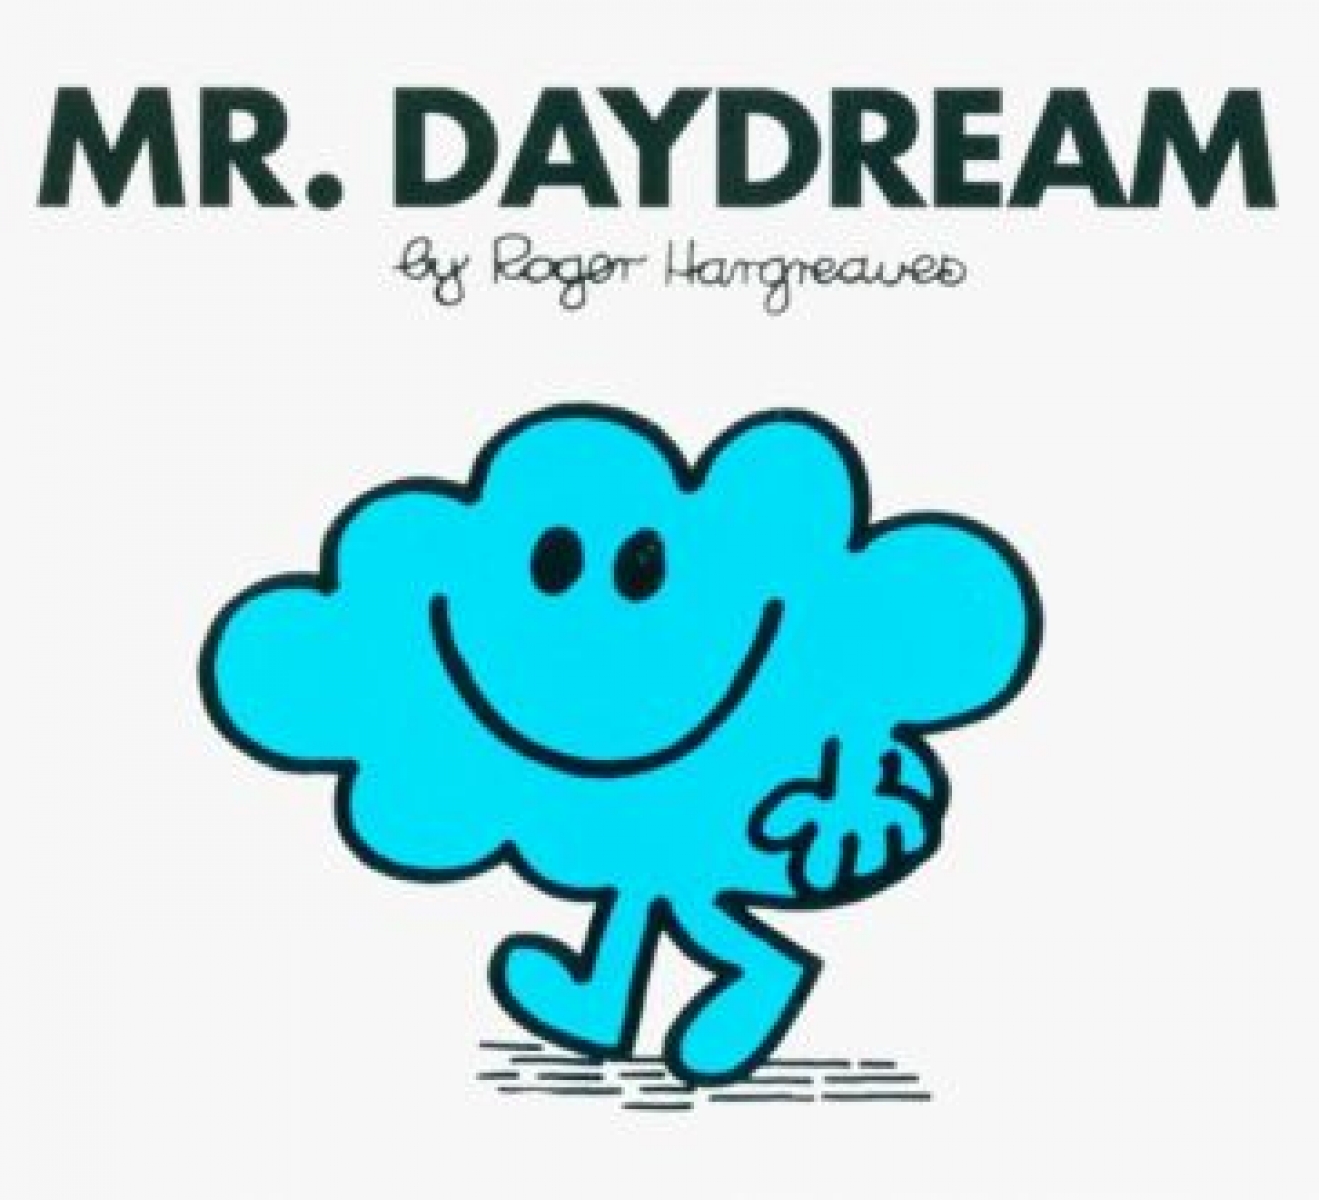 Hargreaves Roger Mr. Daydream 